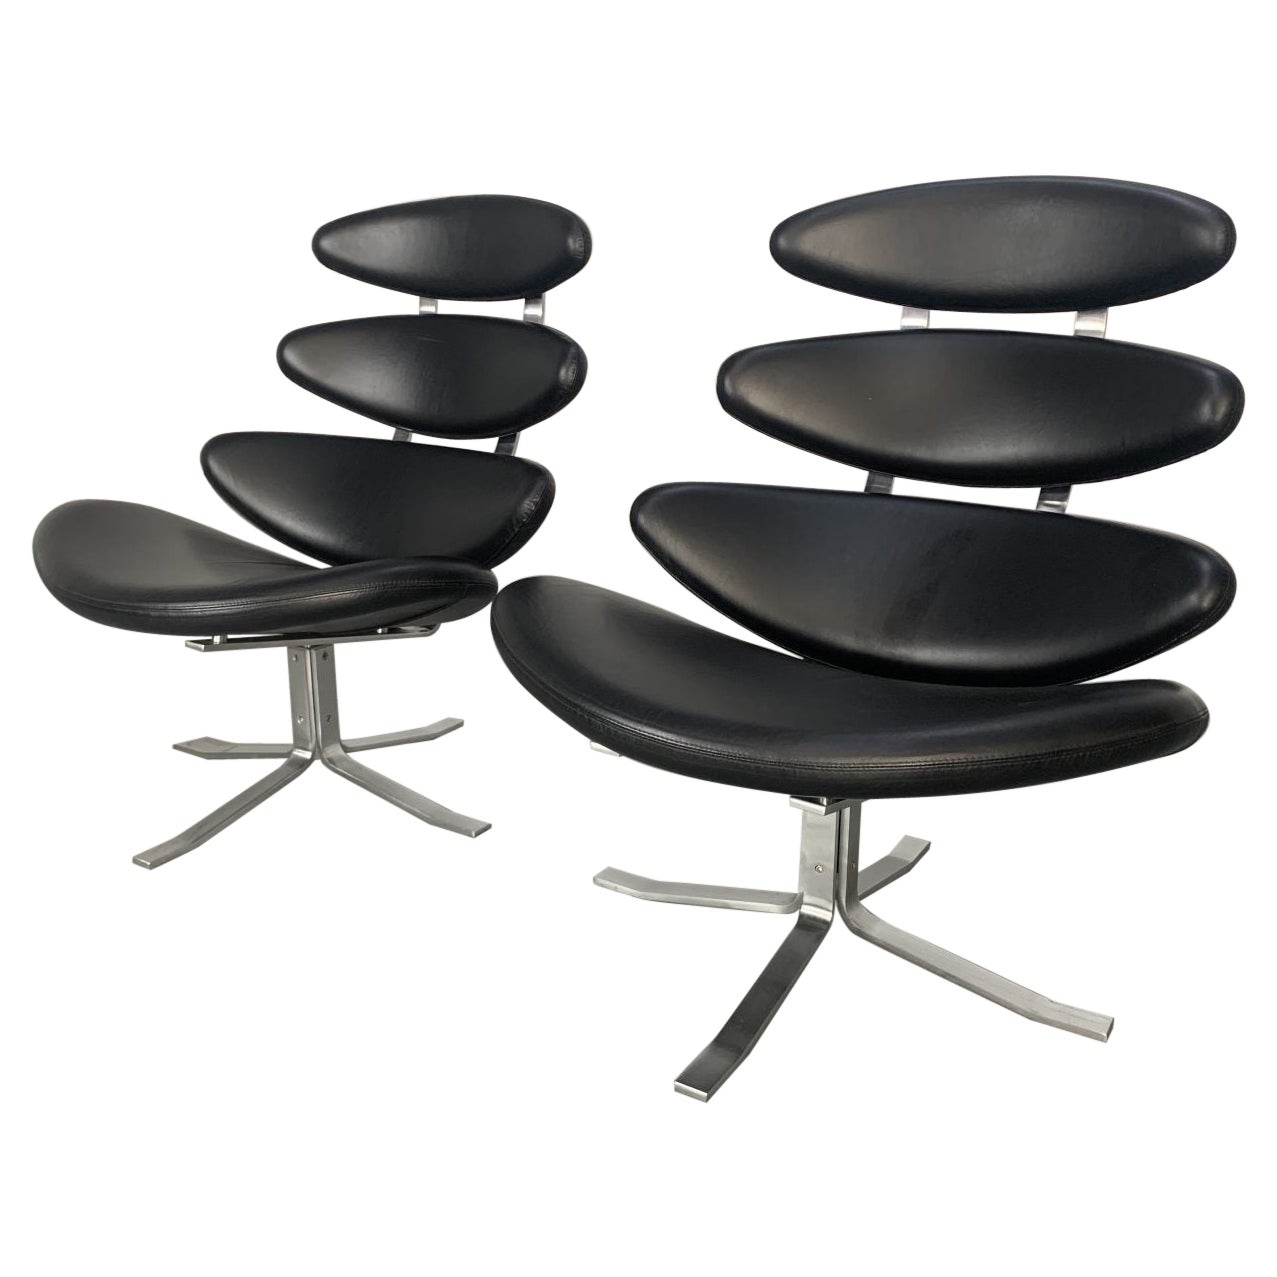 Spectacular Pair of Erik Jorgensen “Corona” EJ5 Chairs in Black “Apache” Leather